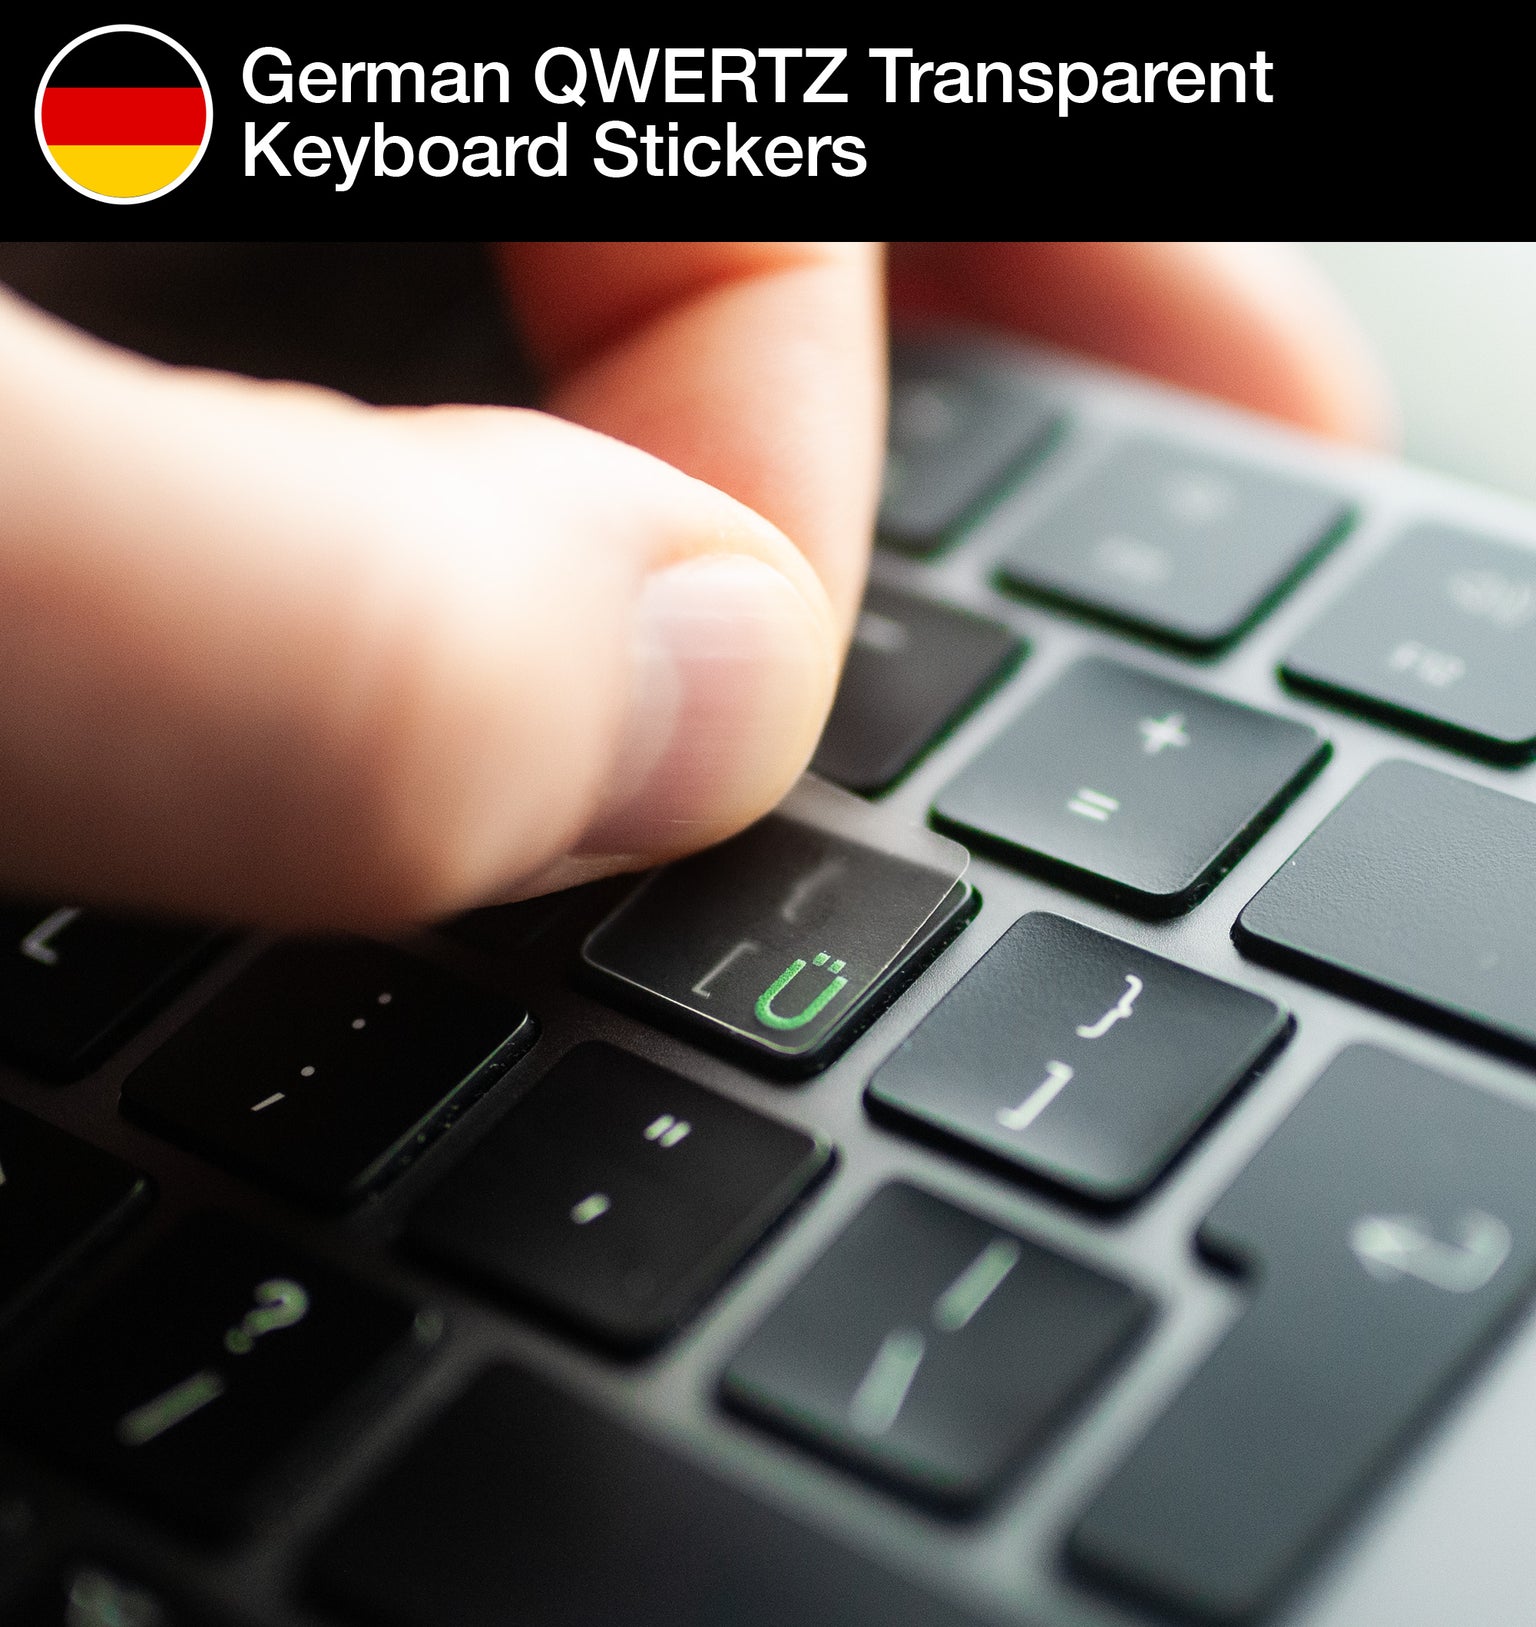 German QWERTZ Transparent Keyboard Stickers with German keyboard layout